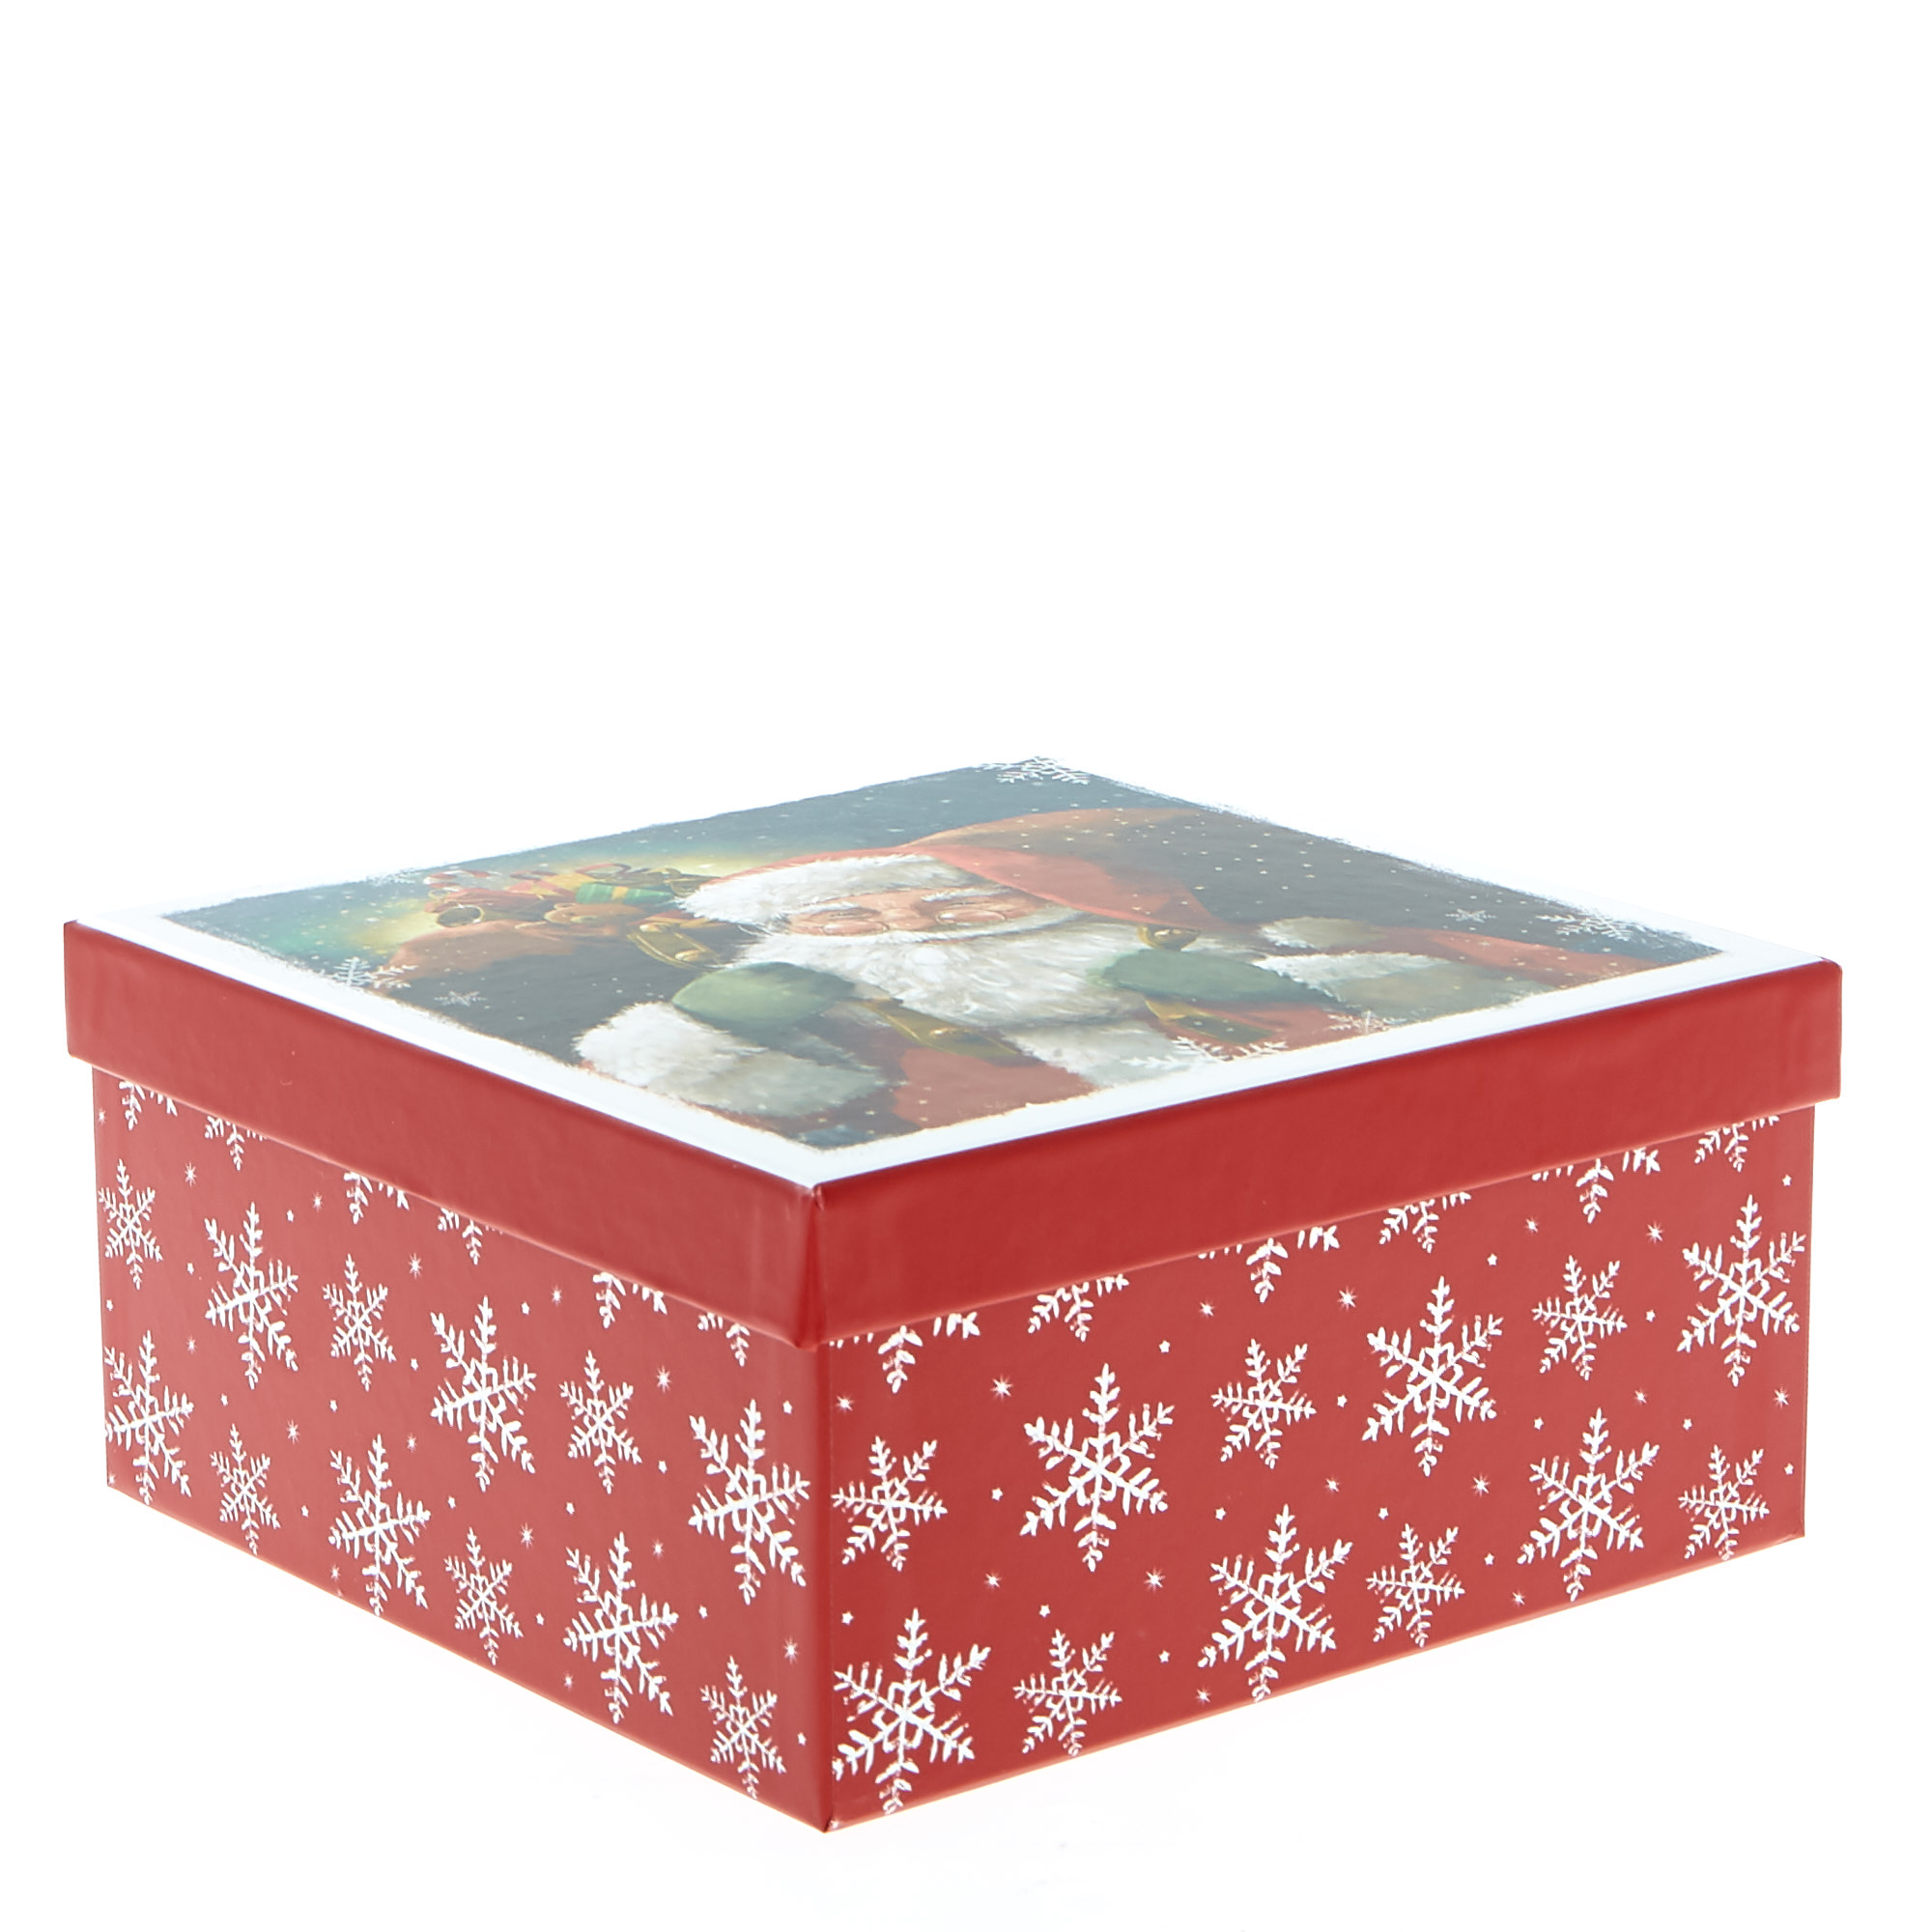 Traditional Santa Christmas Gift Boxes - Set Of 4